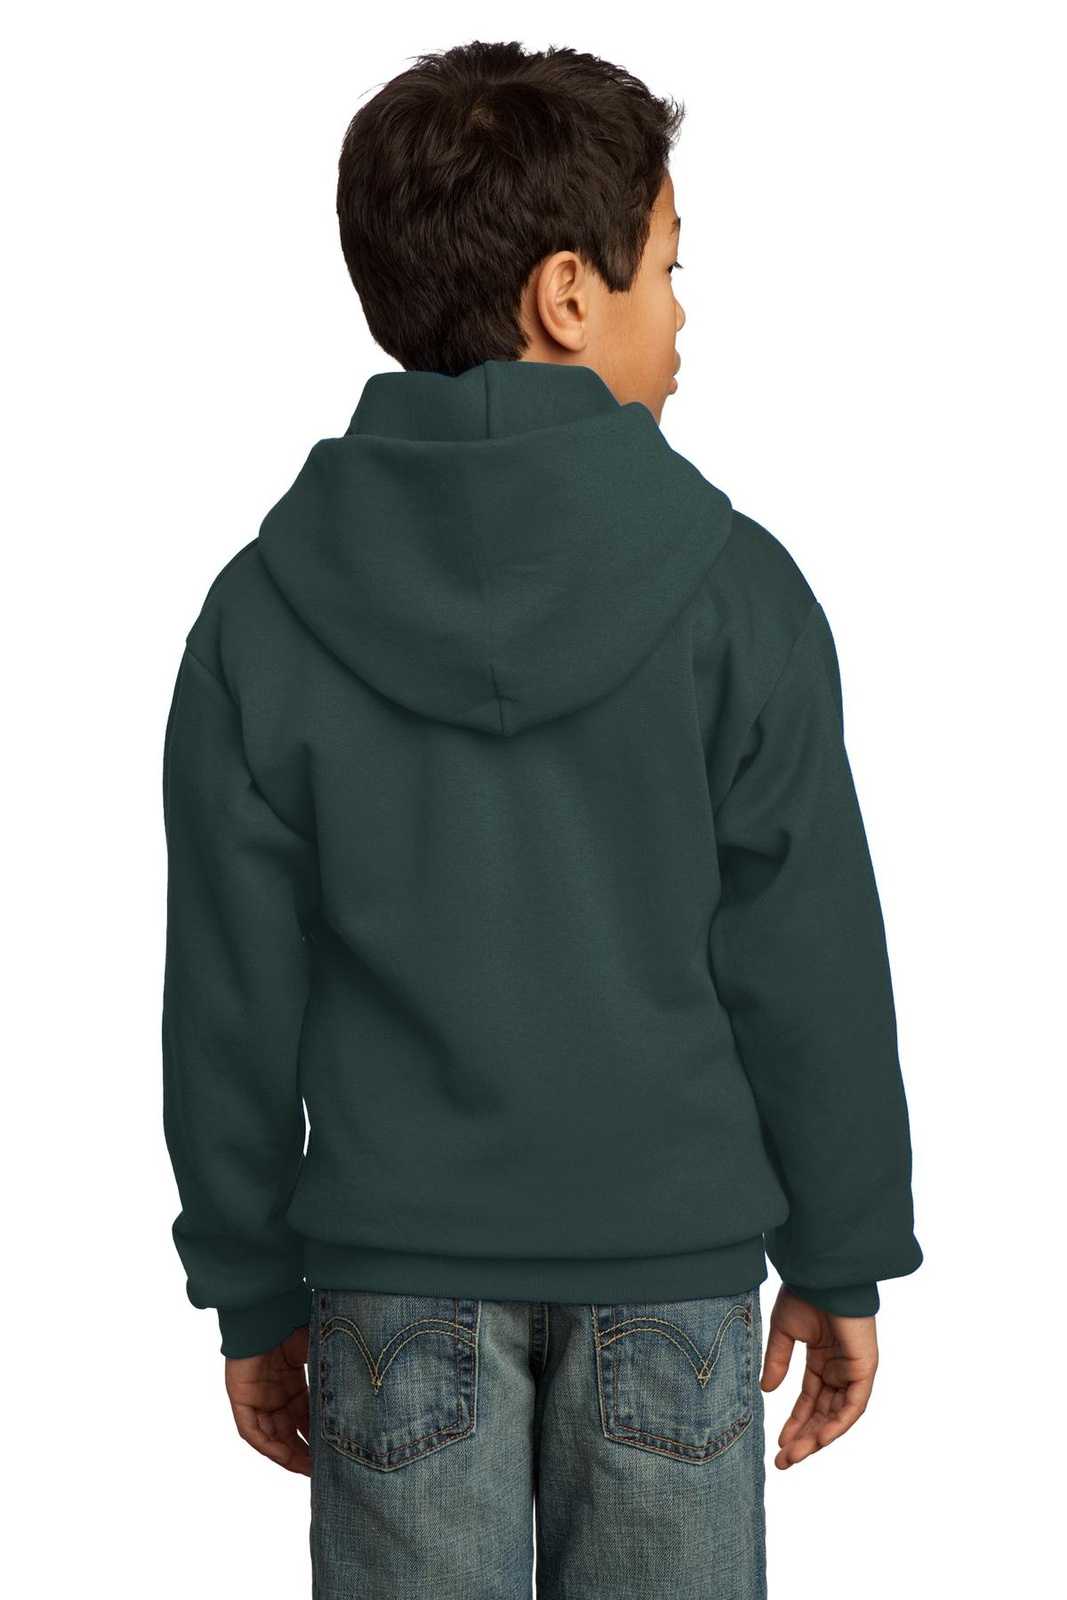 Port & Company PC90YH Youth Core Fleece Pullover Hooded Sweatshirt - Dark Green - HIT a Double - 1